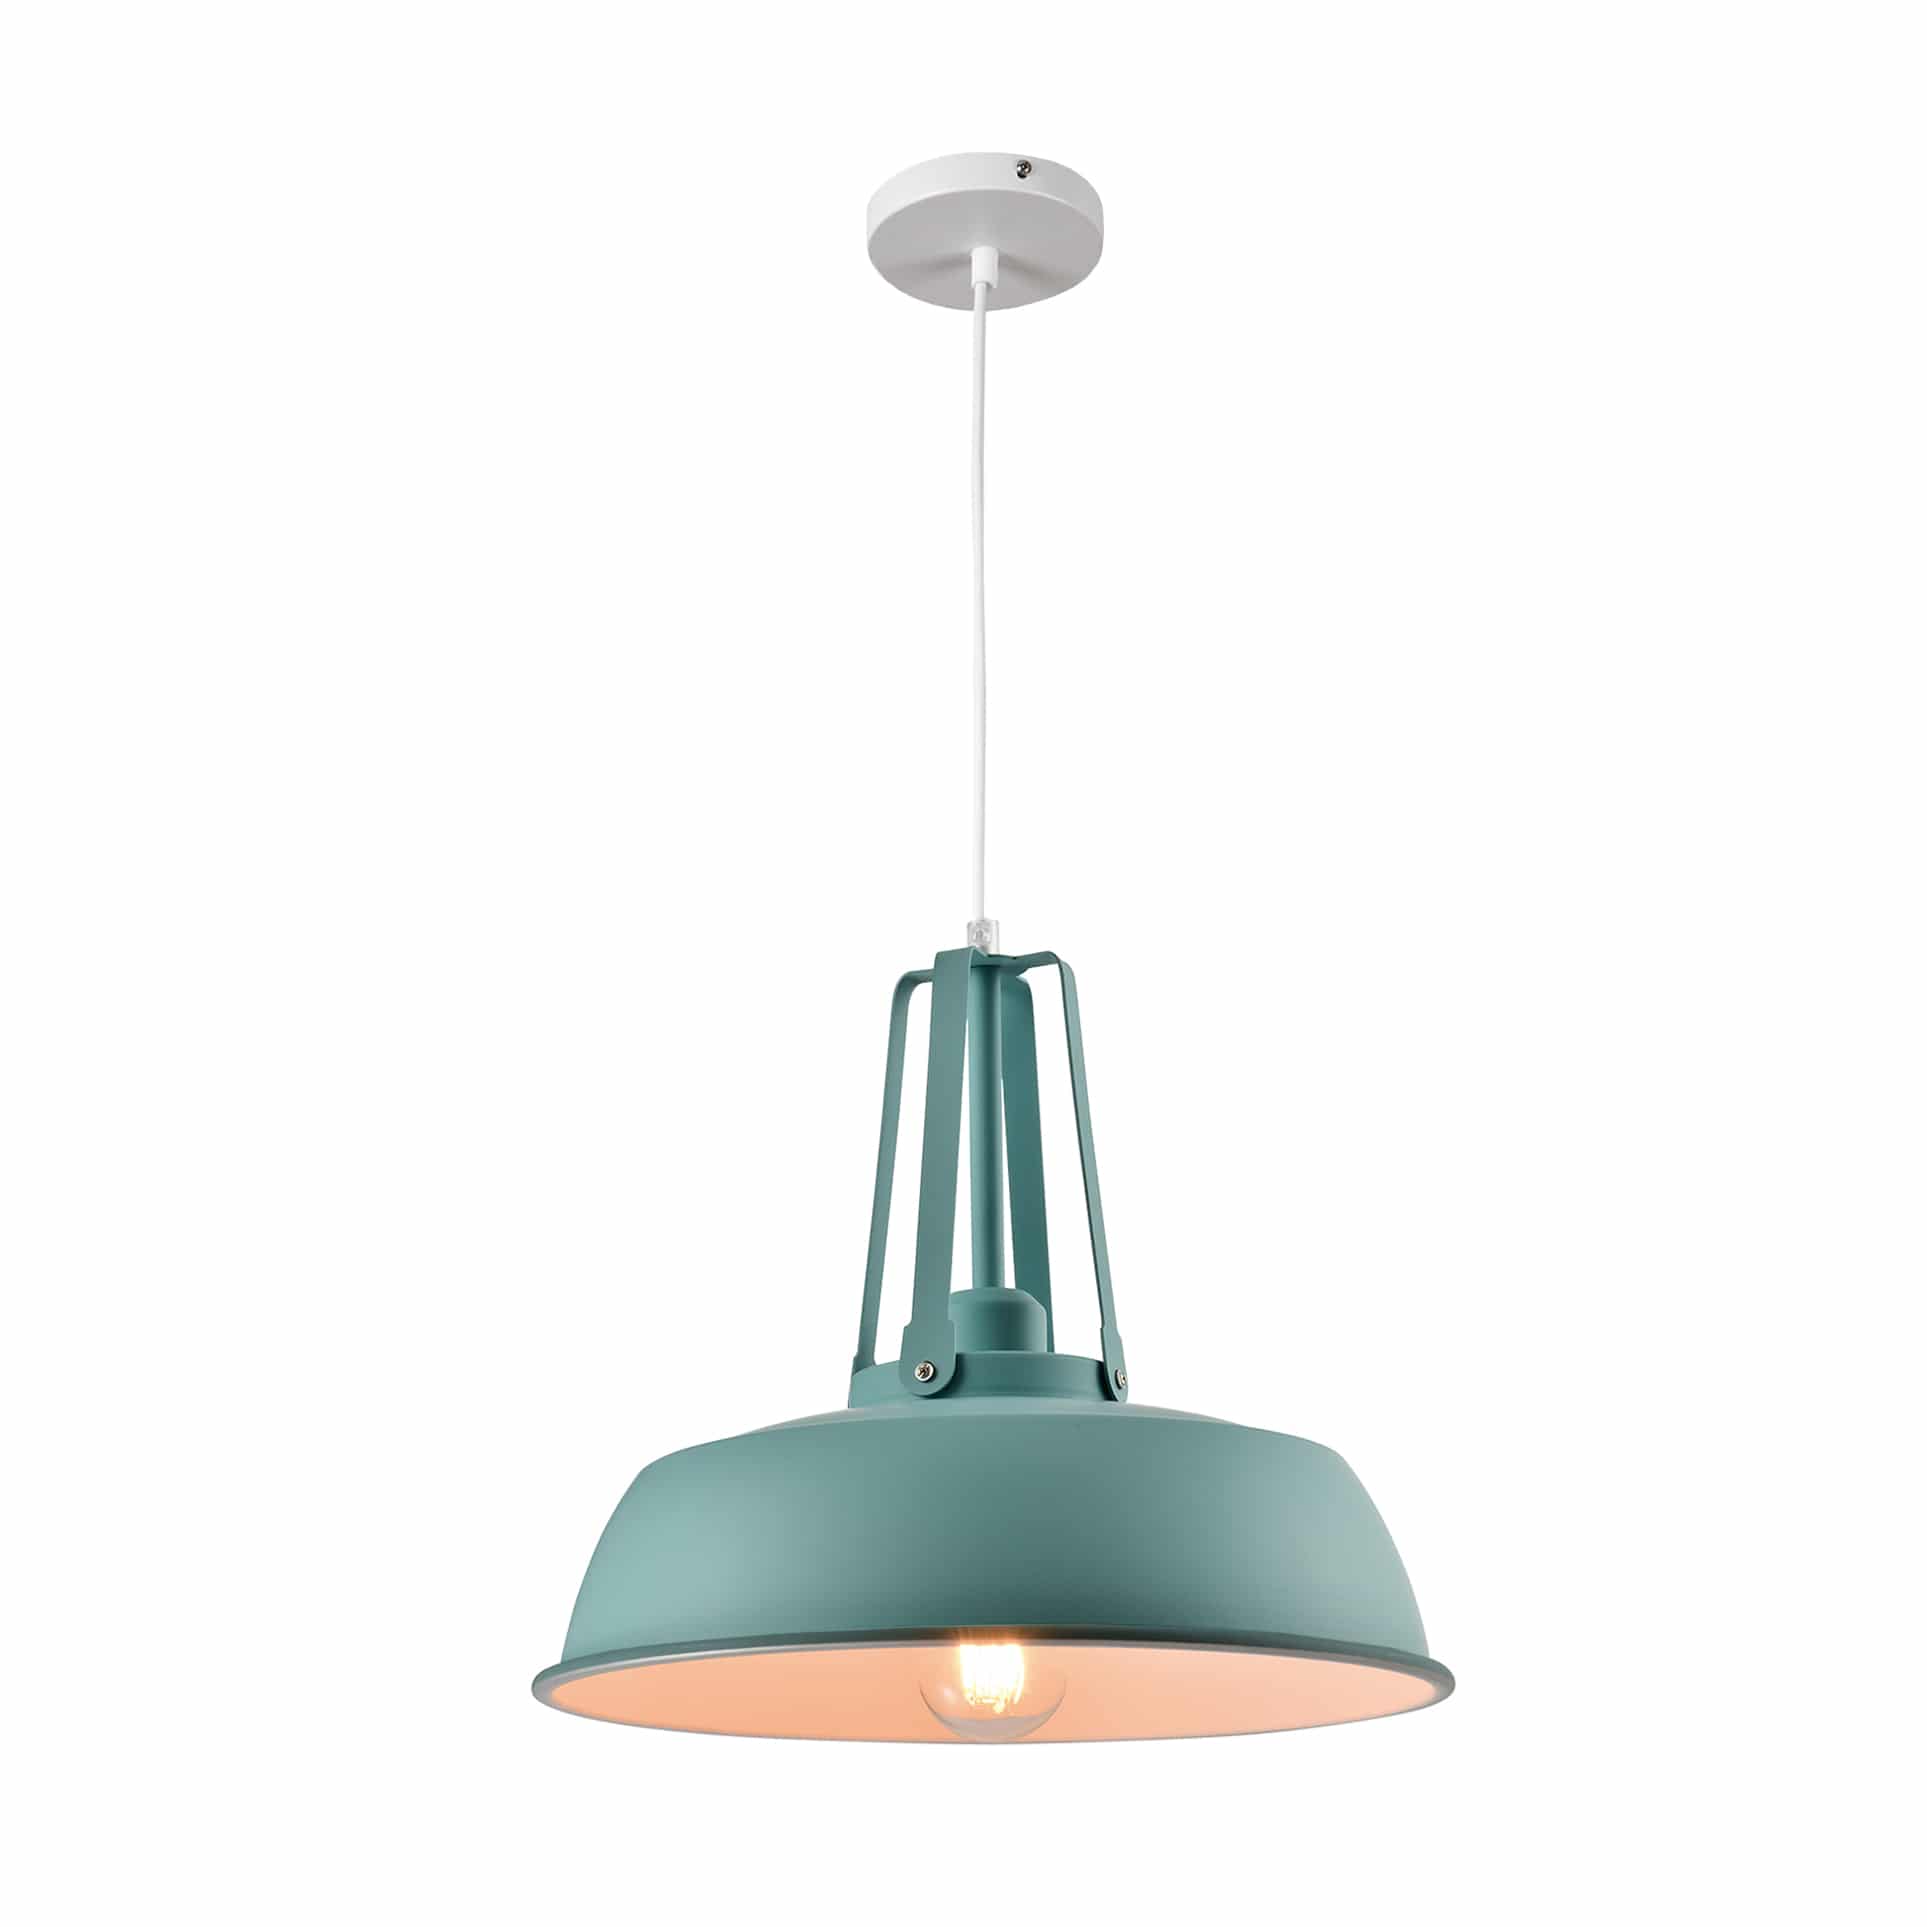 QUVIO Hanglamp industrieel - Bolvormige kap - Diameter 35 cm - Turquoise